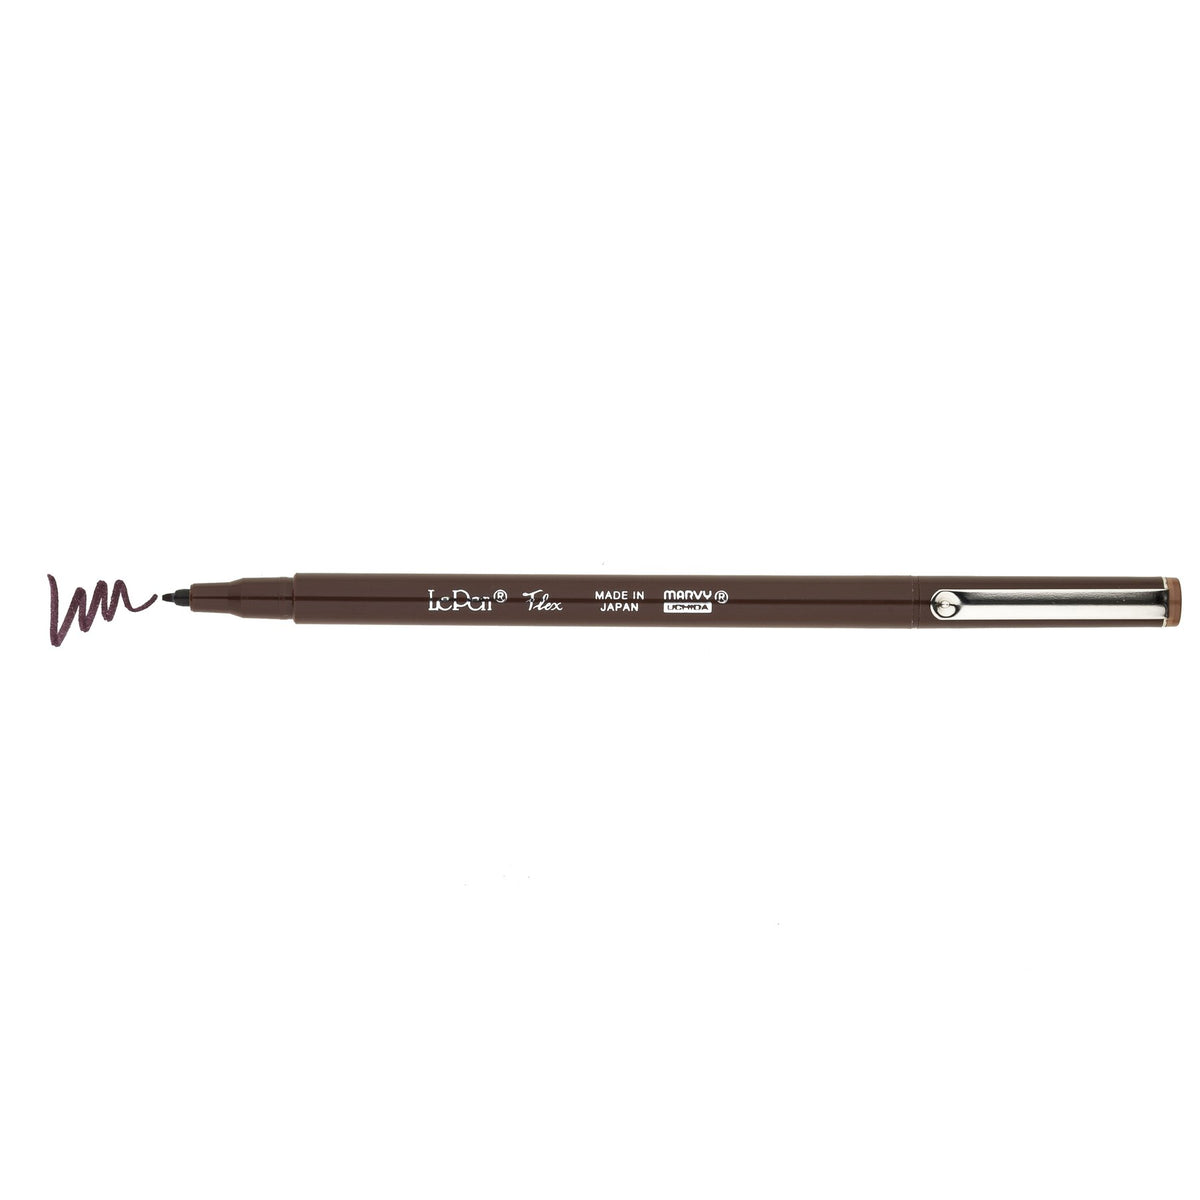 Marvy Uchida - Brush Pen - Le Pen Flex - Brown #6